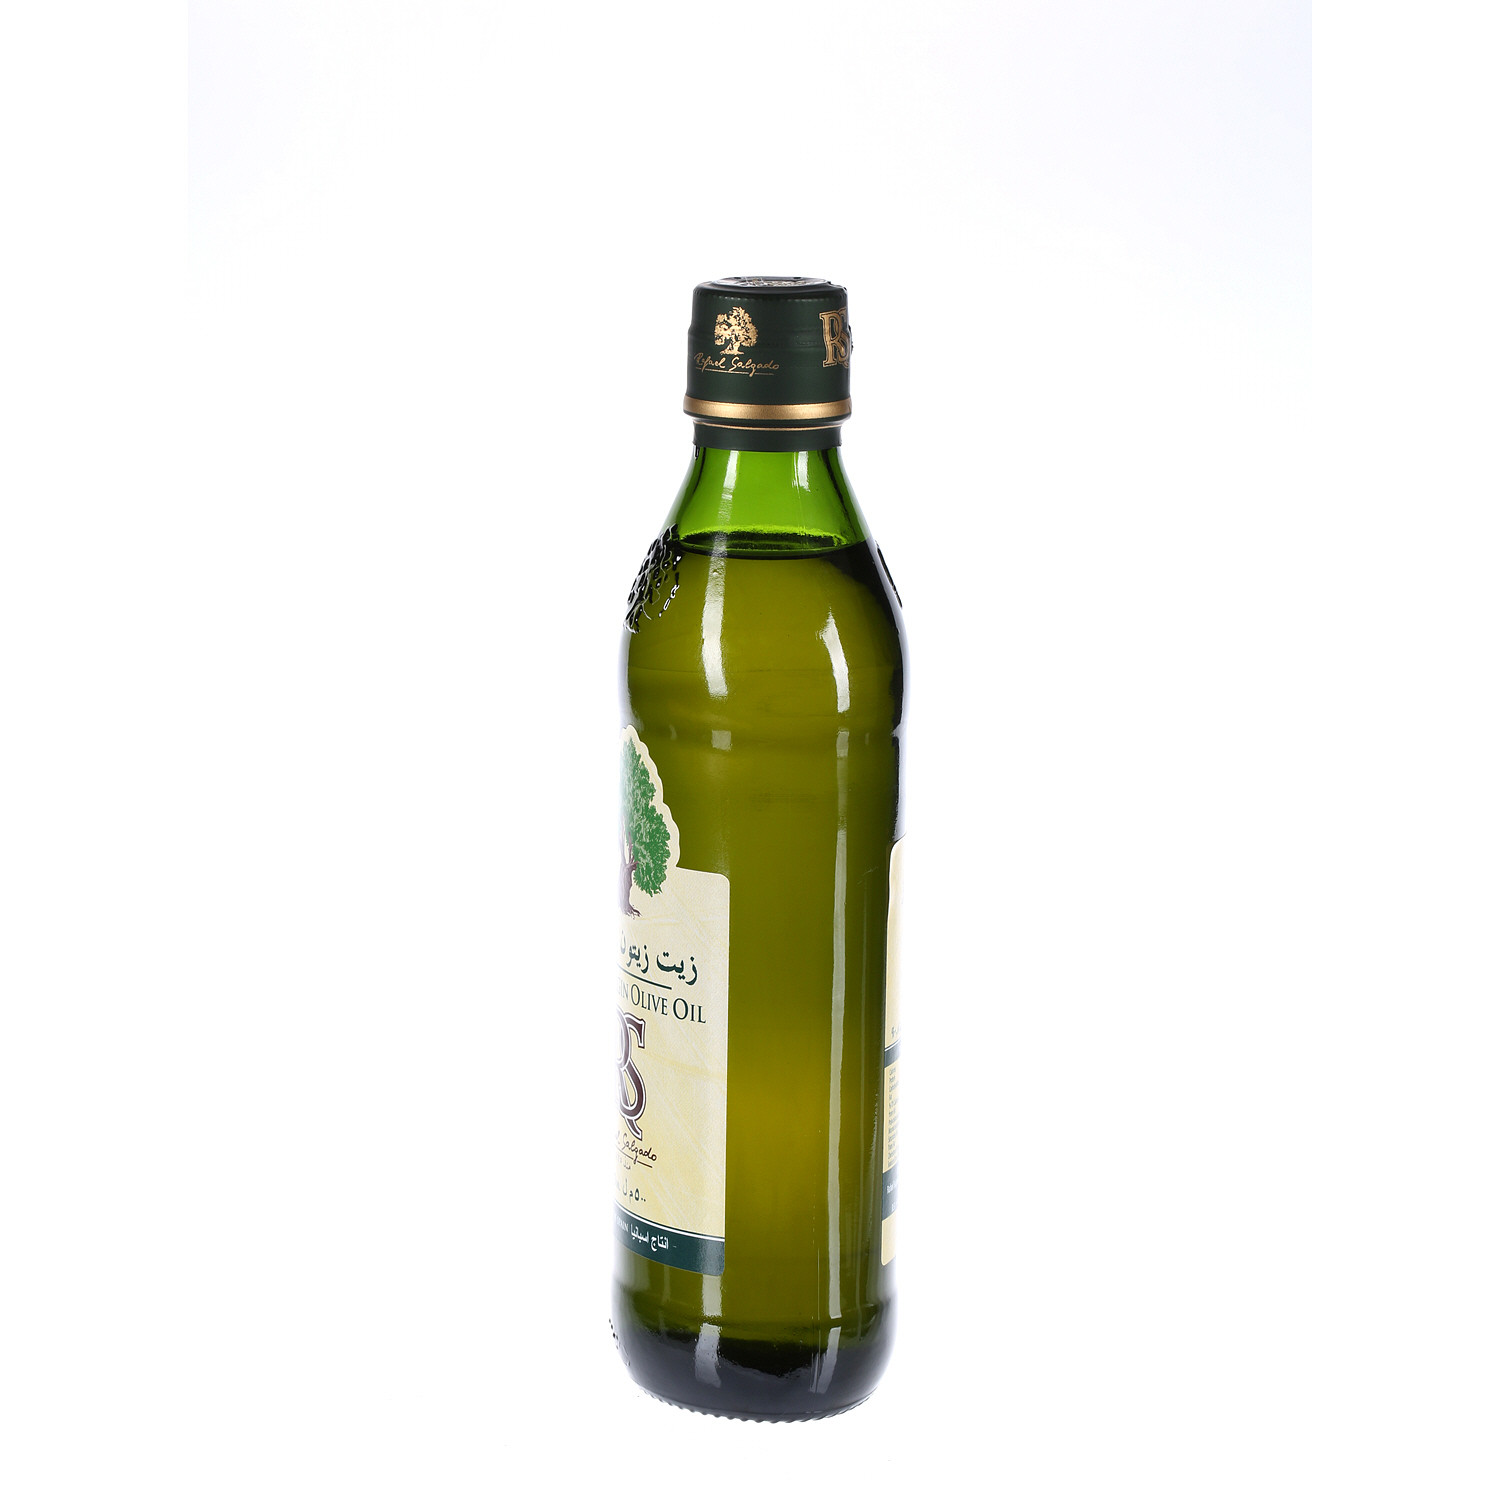 Rafael Salgado Extra Virgin Olive Oil 500ml